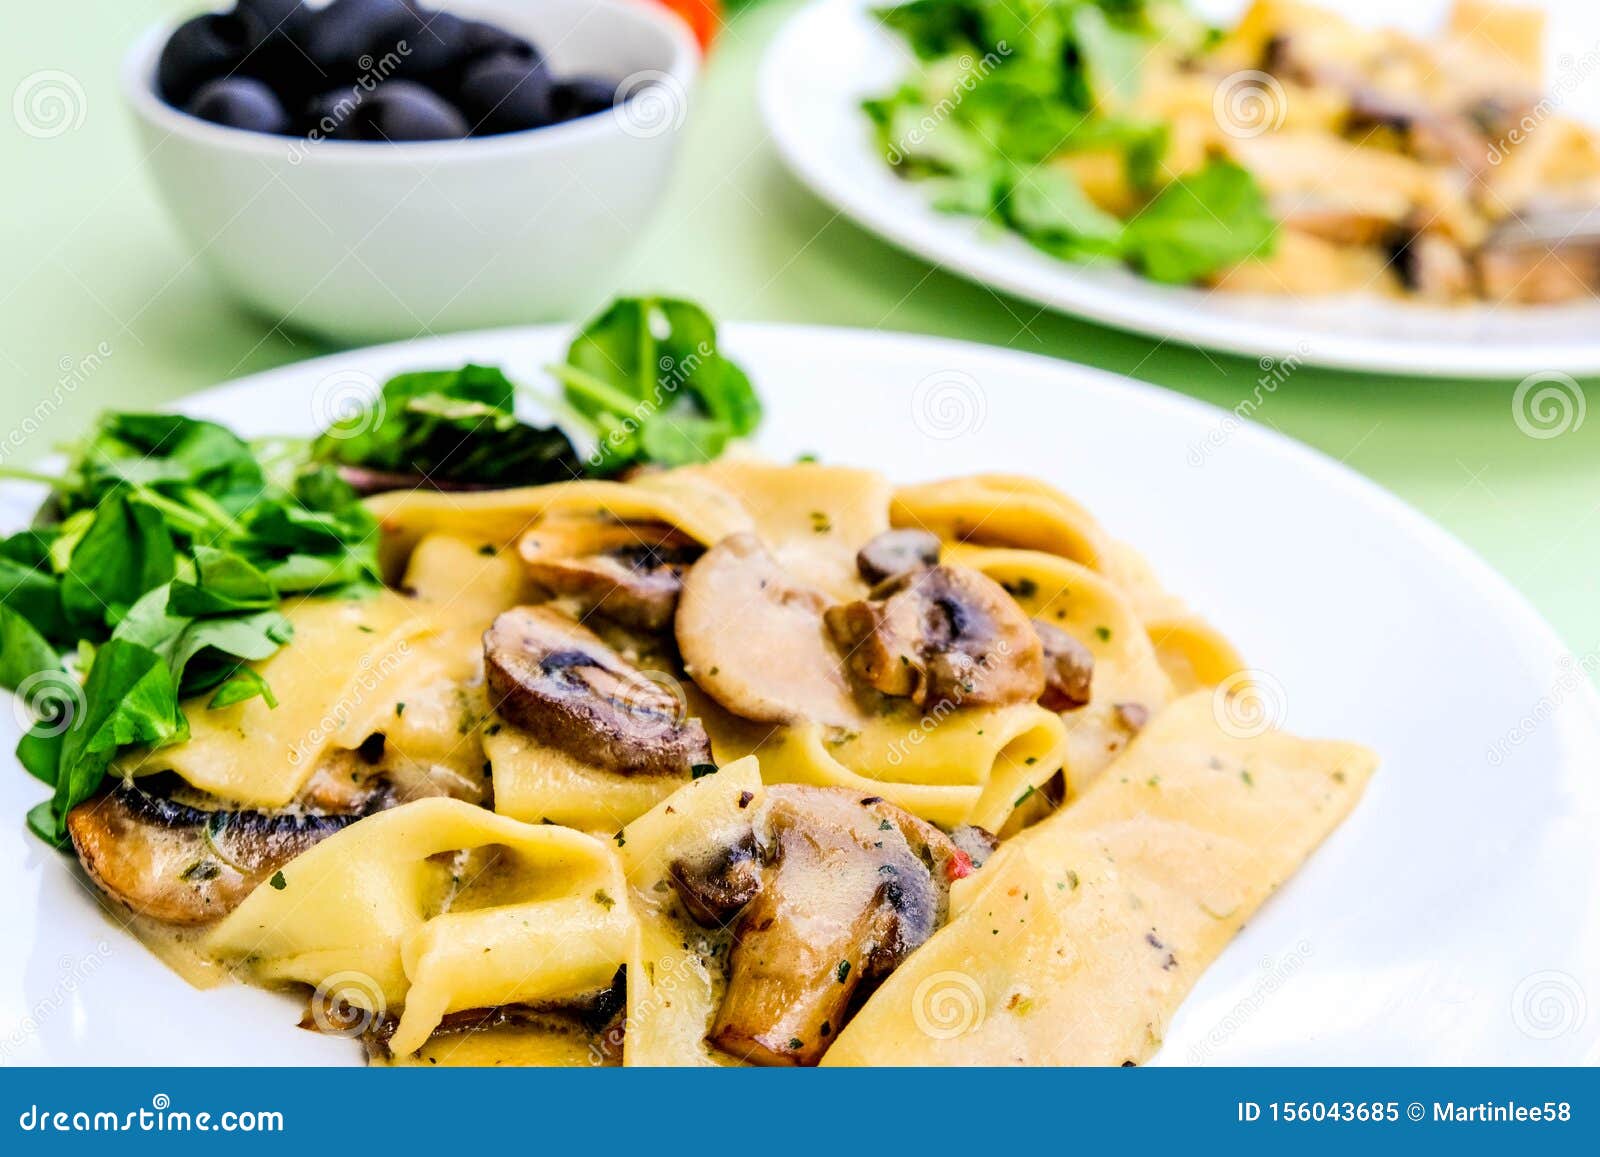 italian style mushroom pappardelle pasta meal